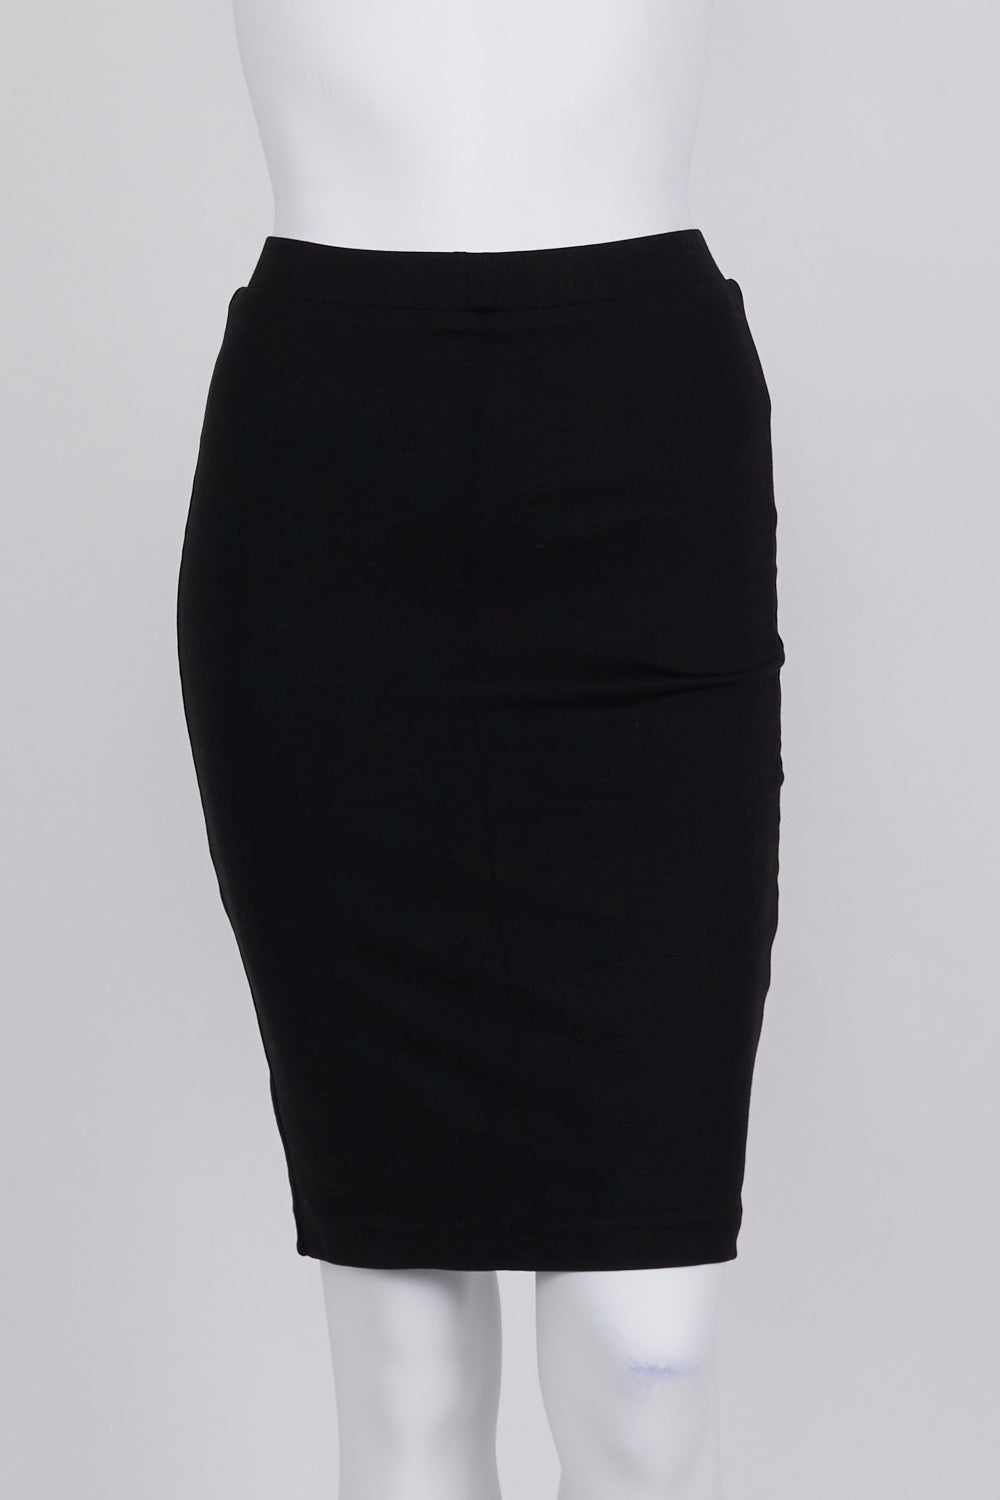 Bardot Black Pencil Skirt 6